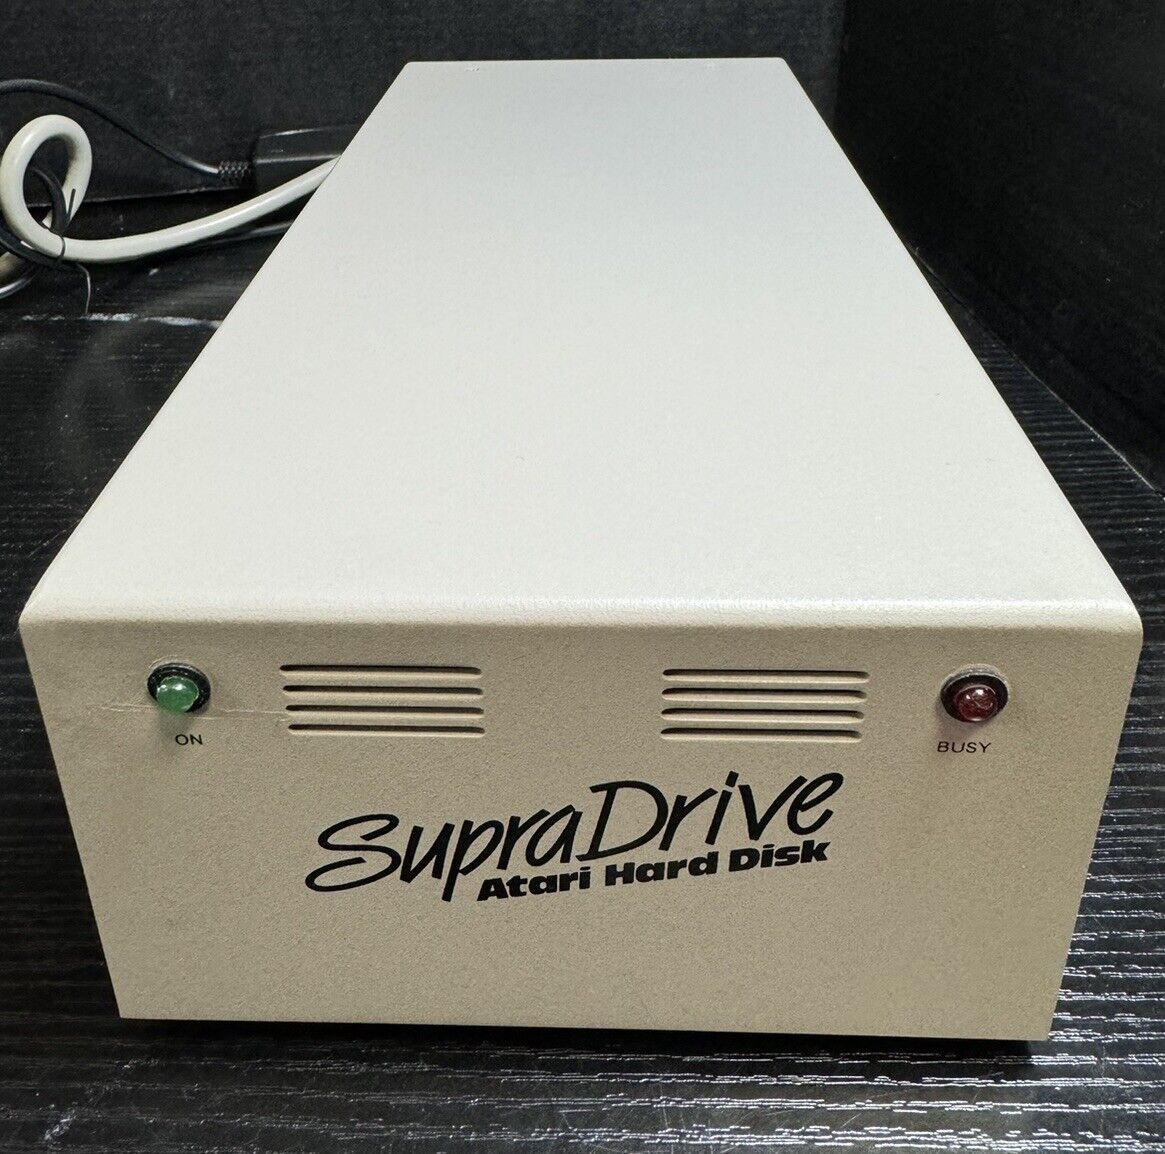 Atari 52MB SupraDrive like ST STE Megafile ACSI SCSI Hard Disk & Cable - TESTED